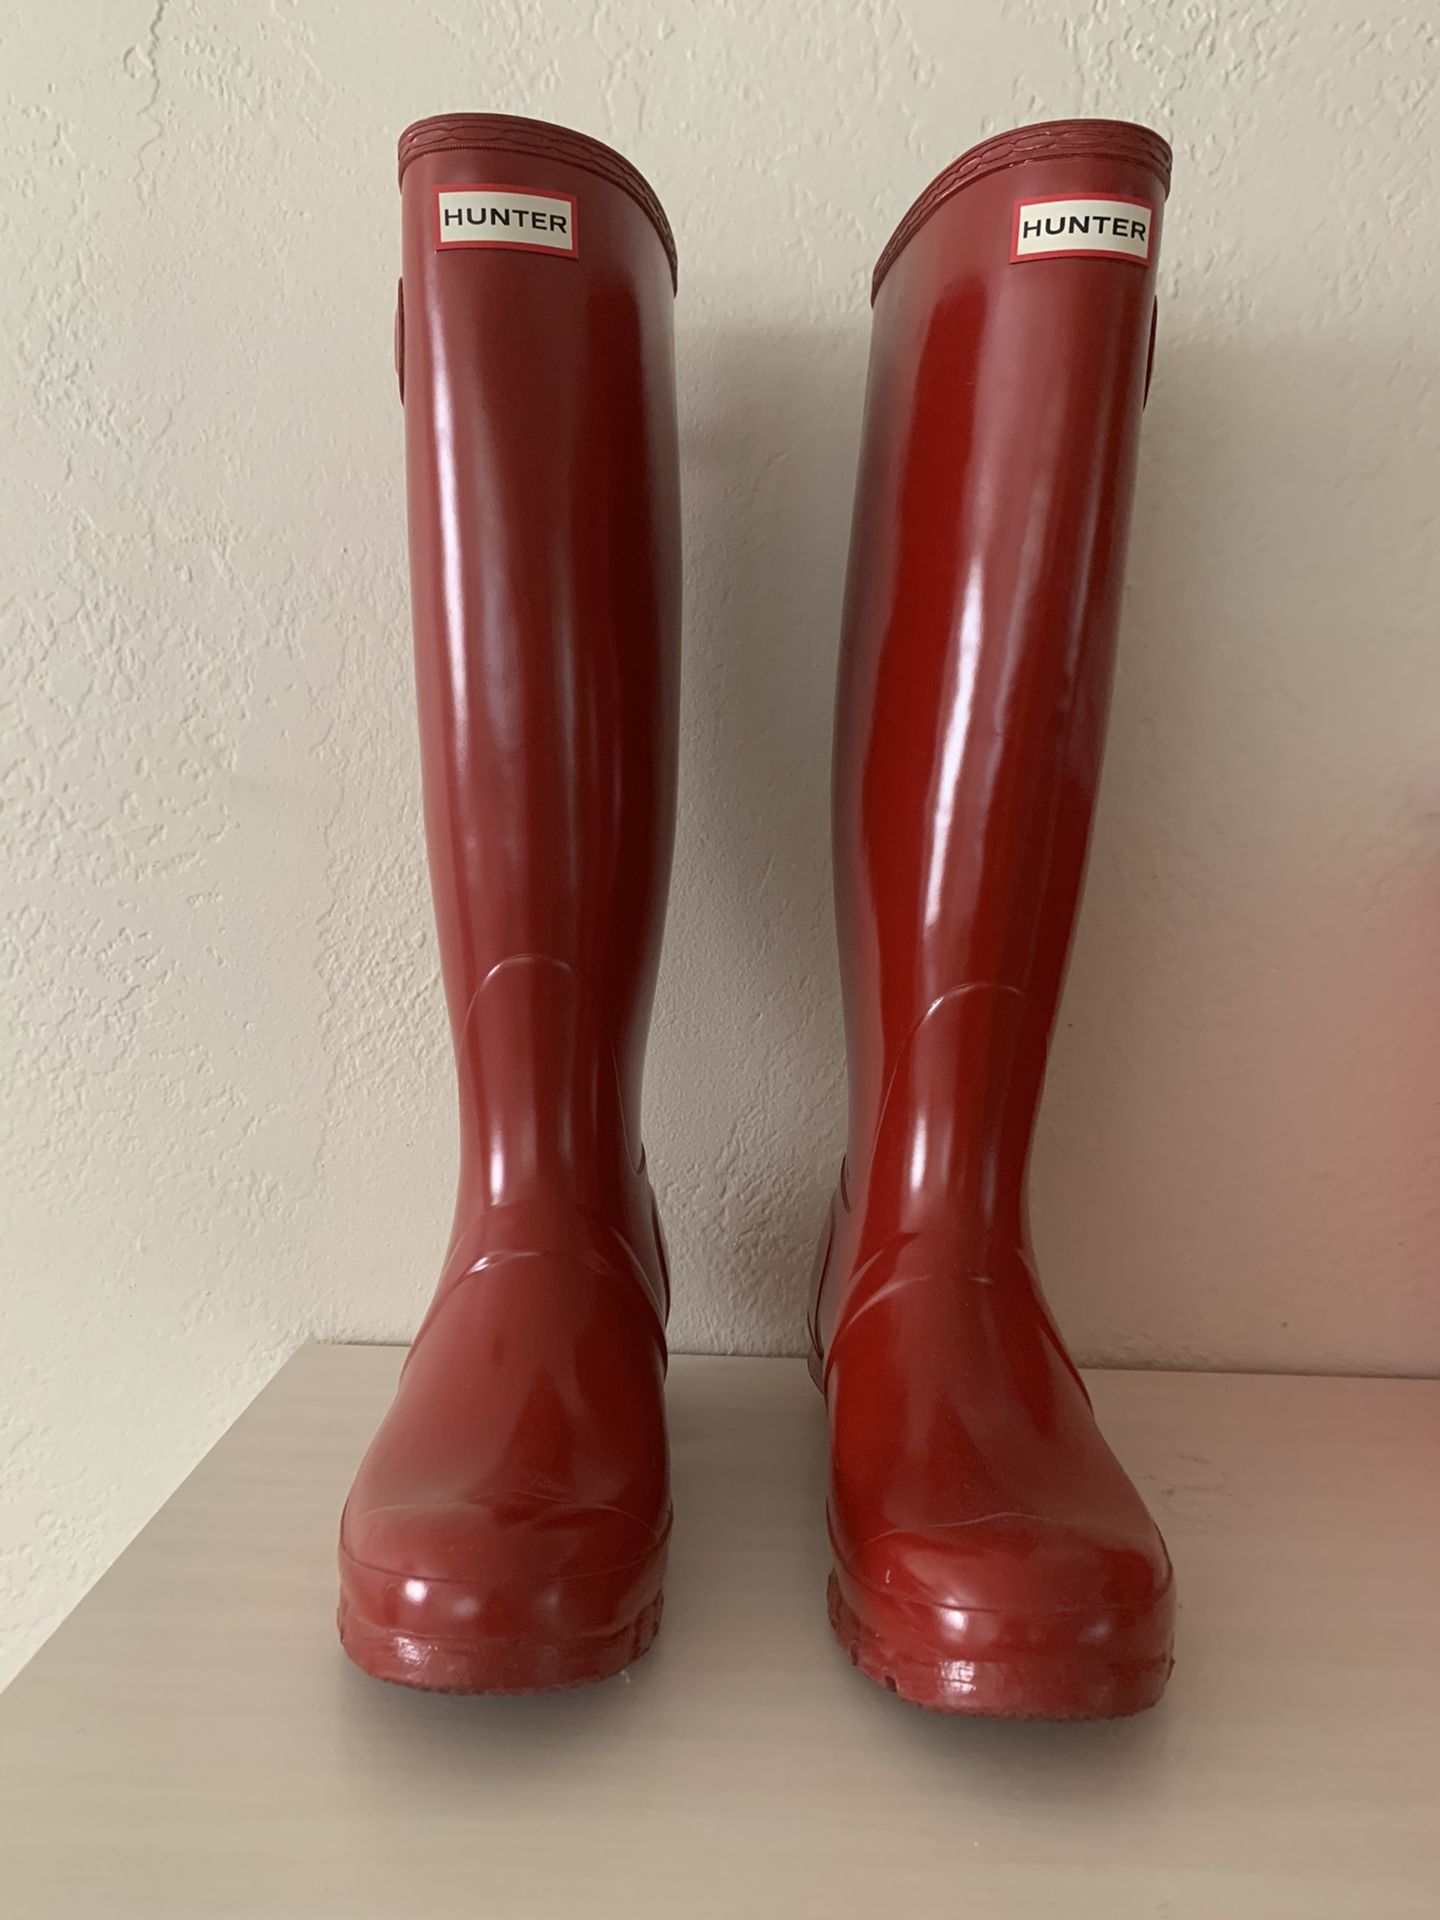 Women’s Red Hunter Rain Boots, size 8